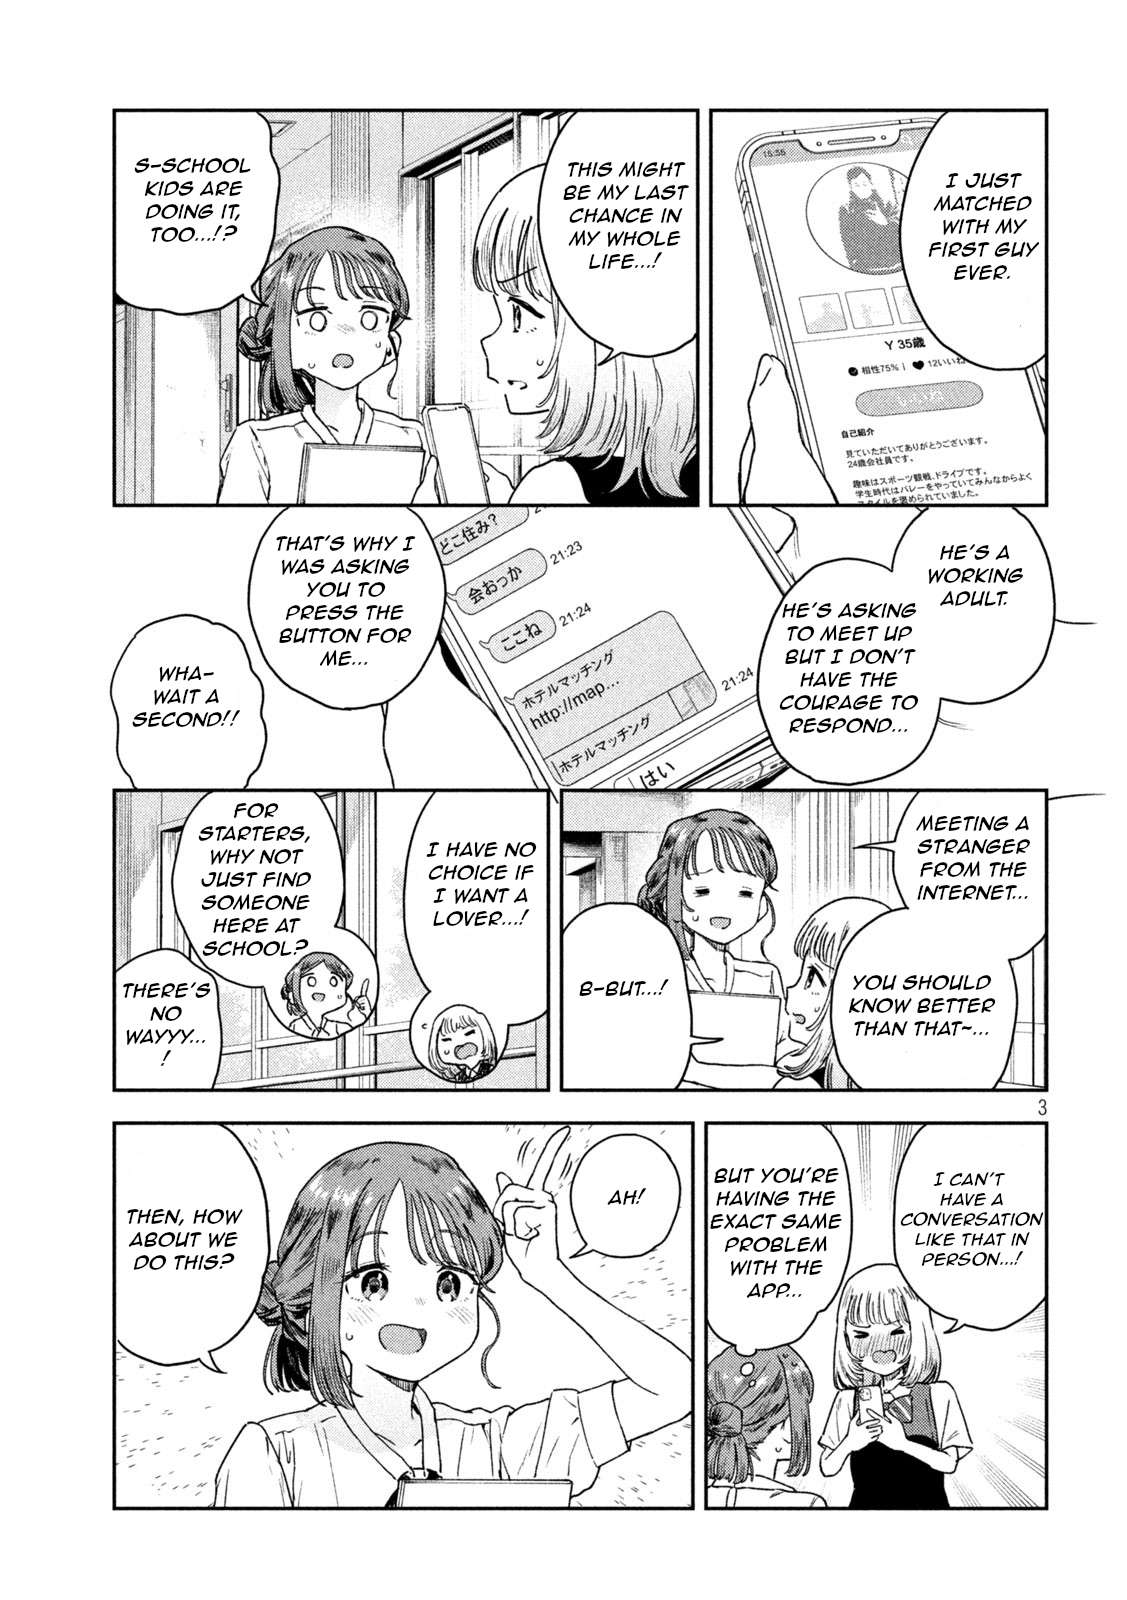 Miyo-Chan Sensei Said So - chapter 8 - #3